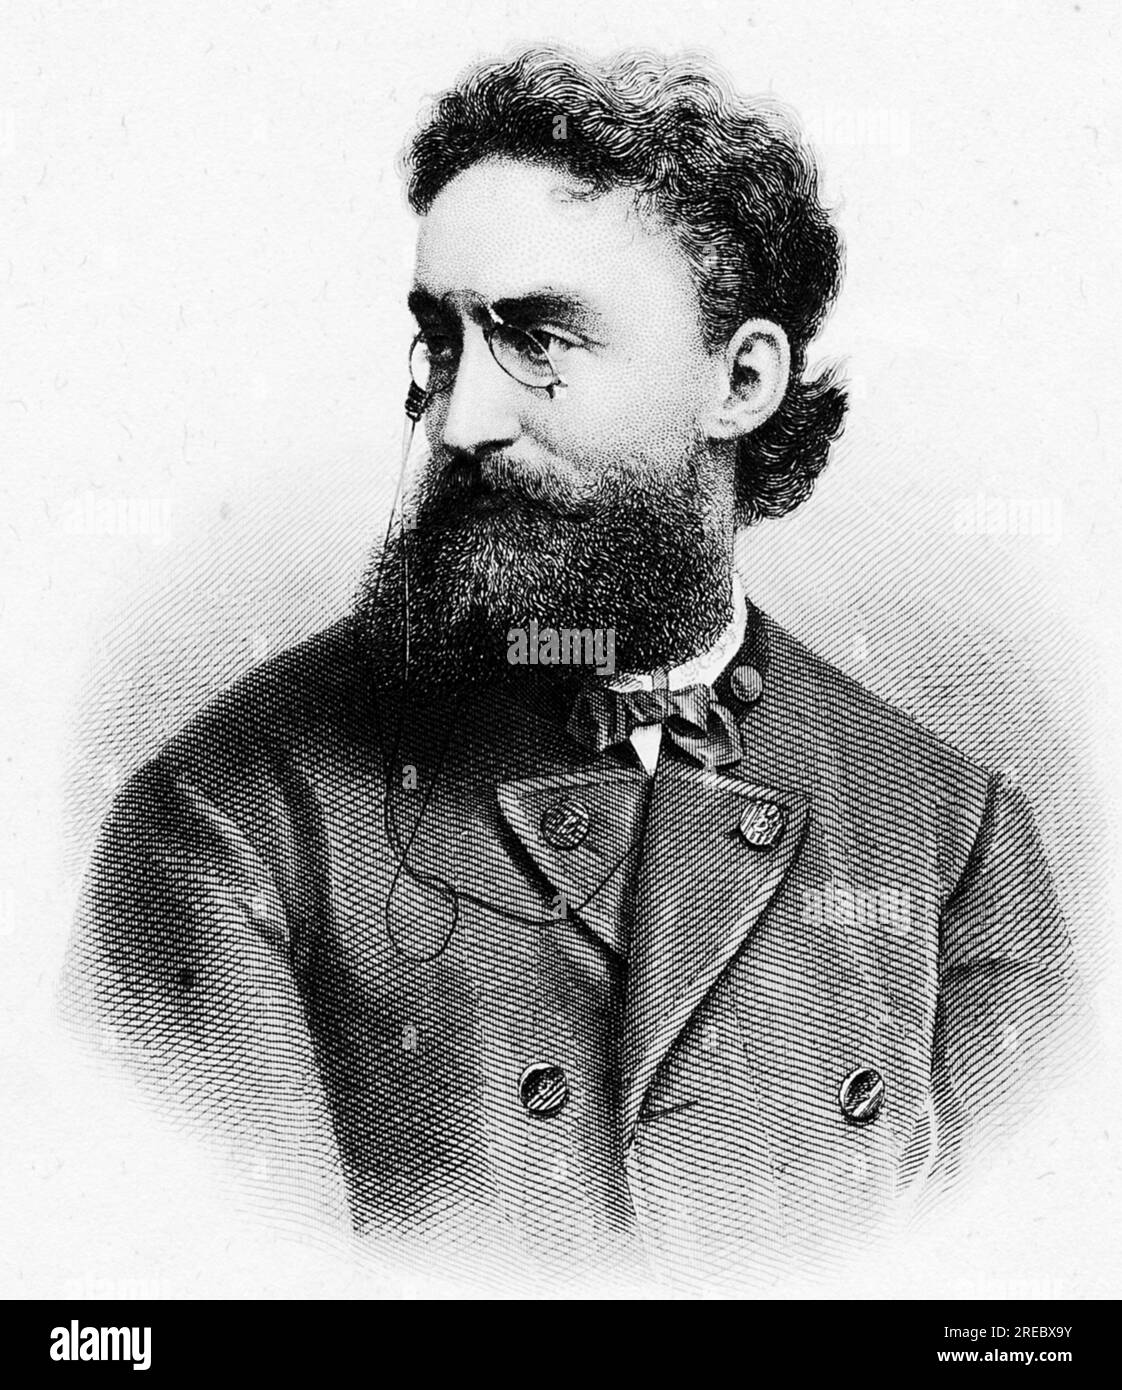 Vacano, Emile Mario, 16.11.1840 - 9,6.1890, artista e scrittore austriaco, ADDITIONAL-RIGHTS-CLEARANCE-INFO-NOT-AVAILABLE Foto Stock